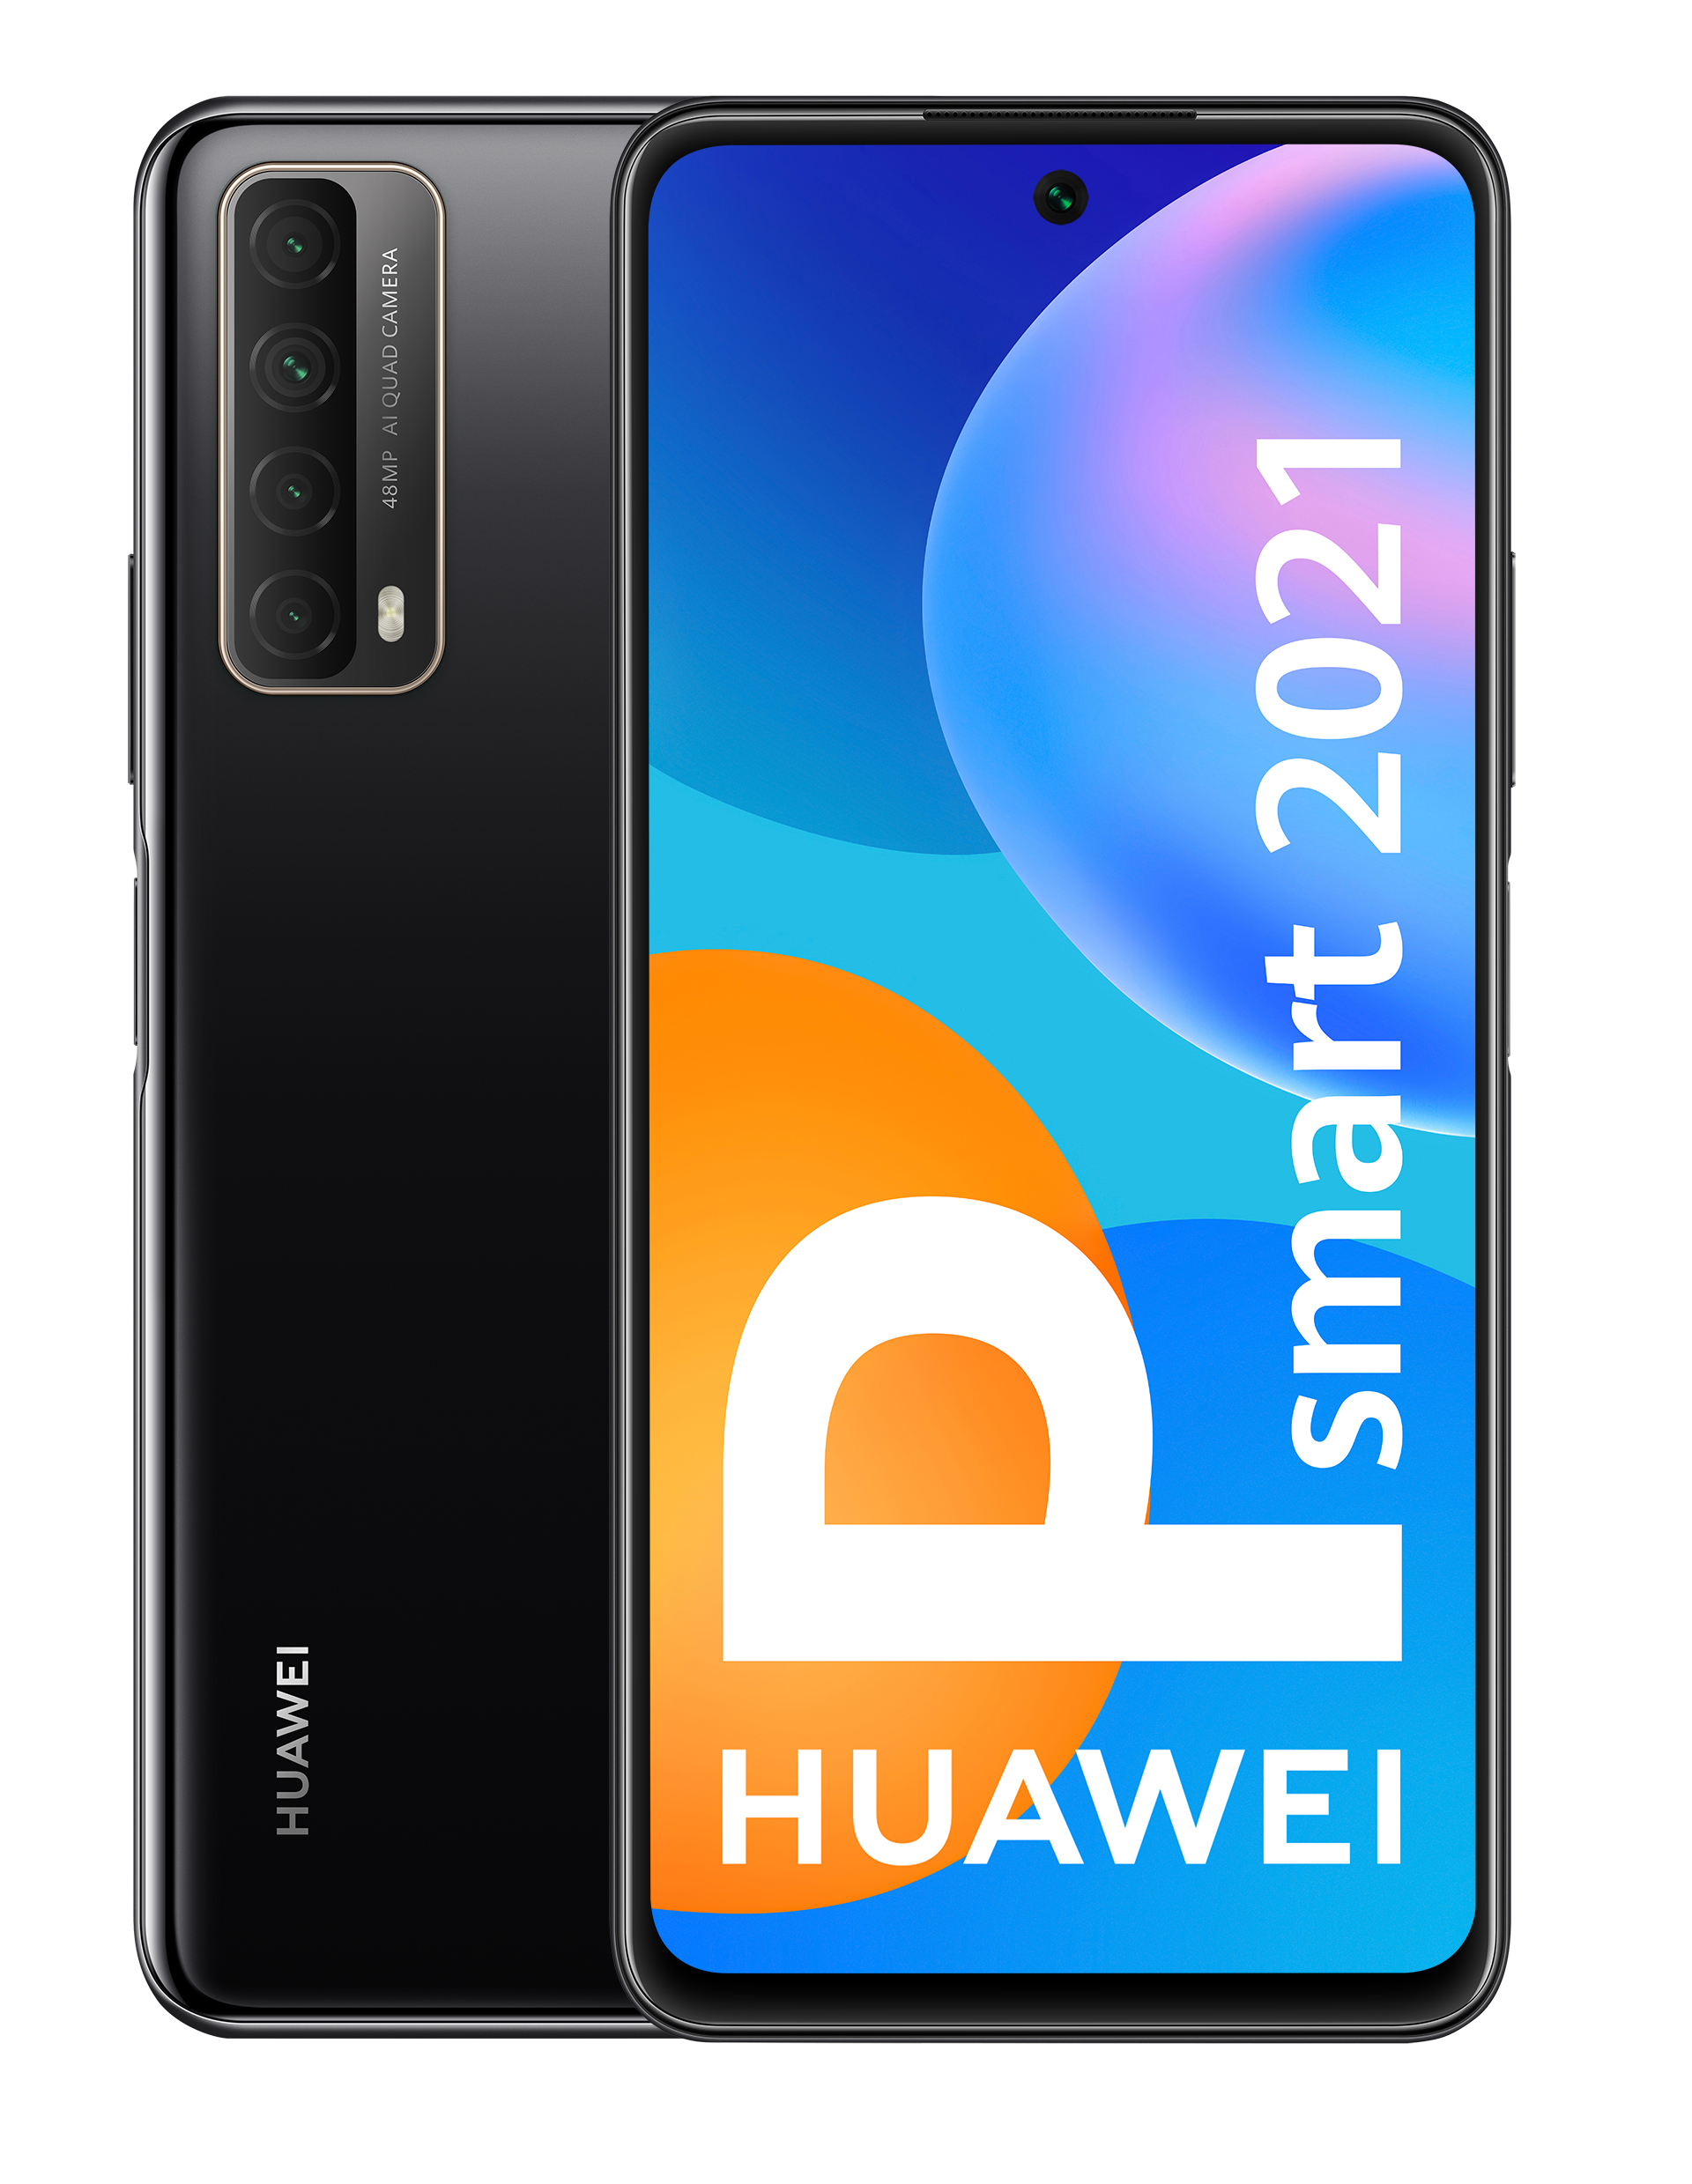 Huawei presenta el nuevo HUAWEI P smart 2021